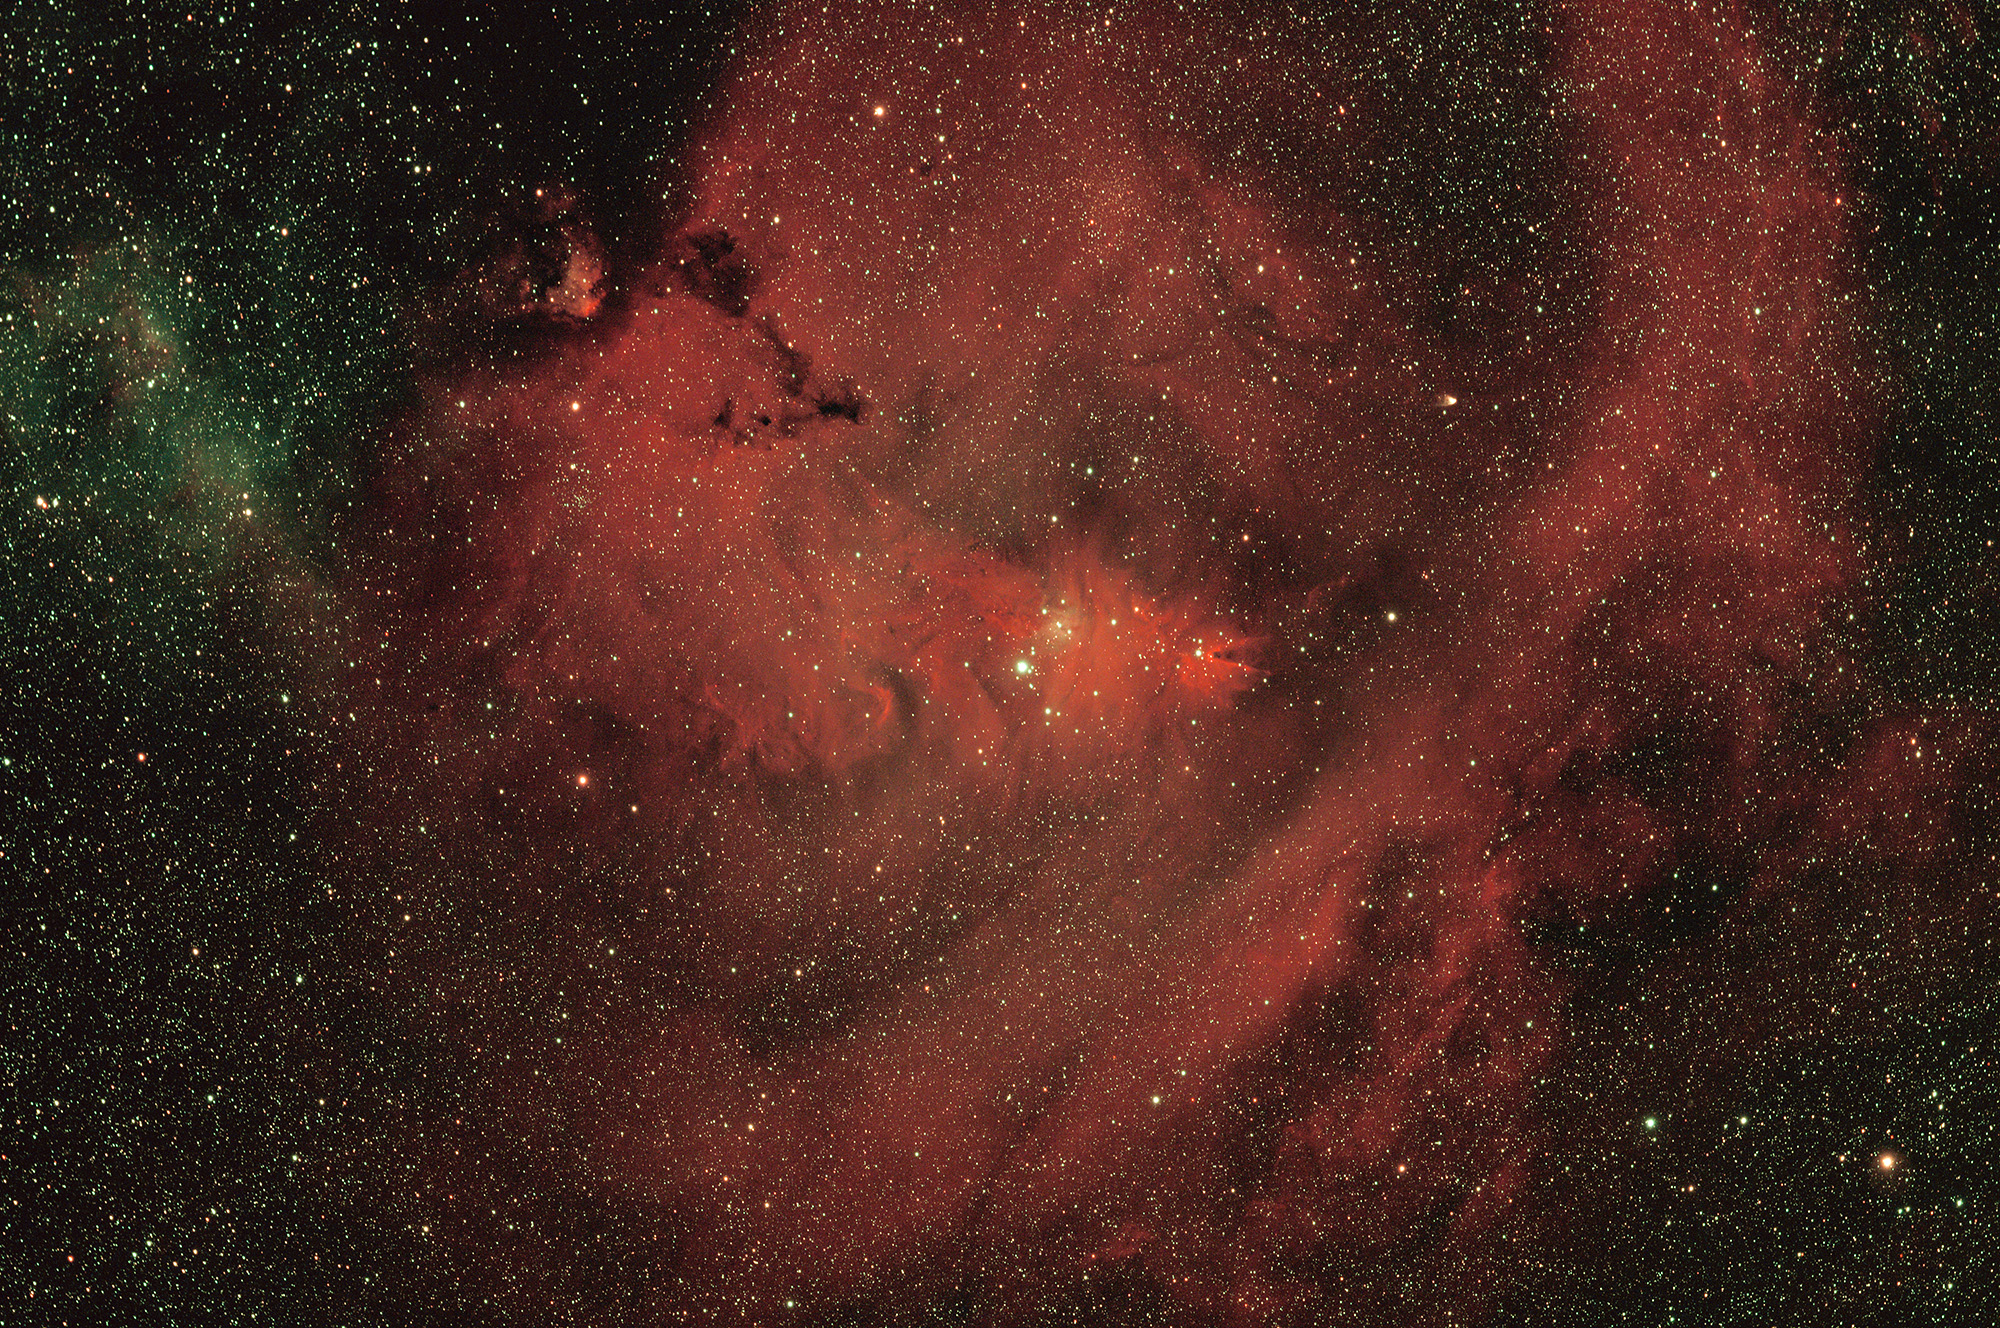 NGC2264_231120_2600MC_-20_300s_dss20-001c1w.jpg